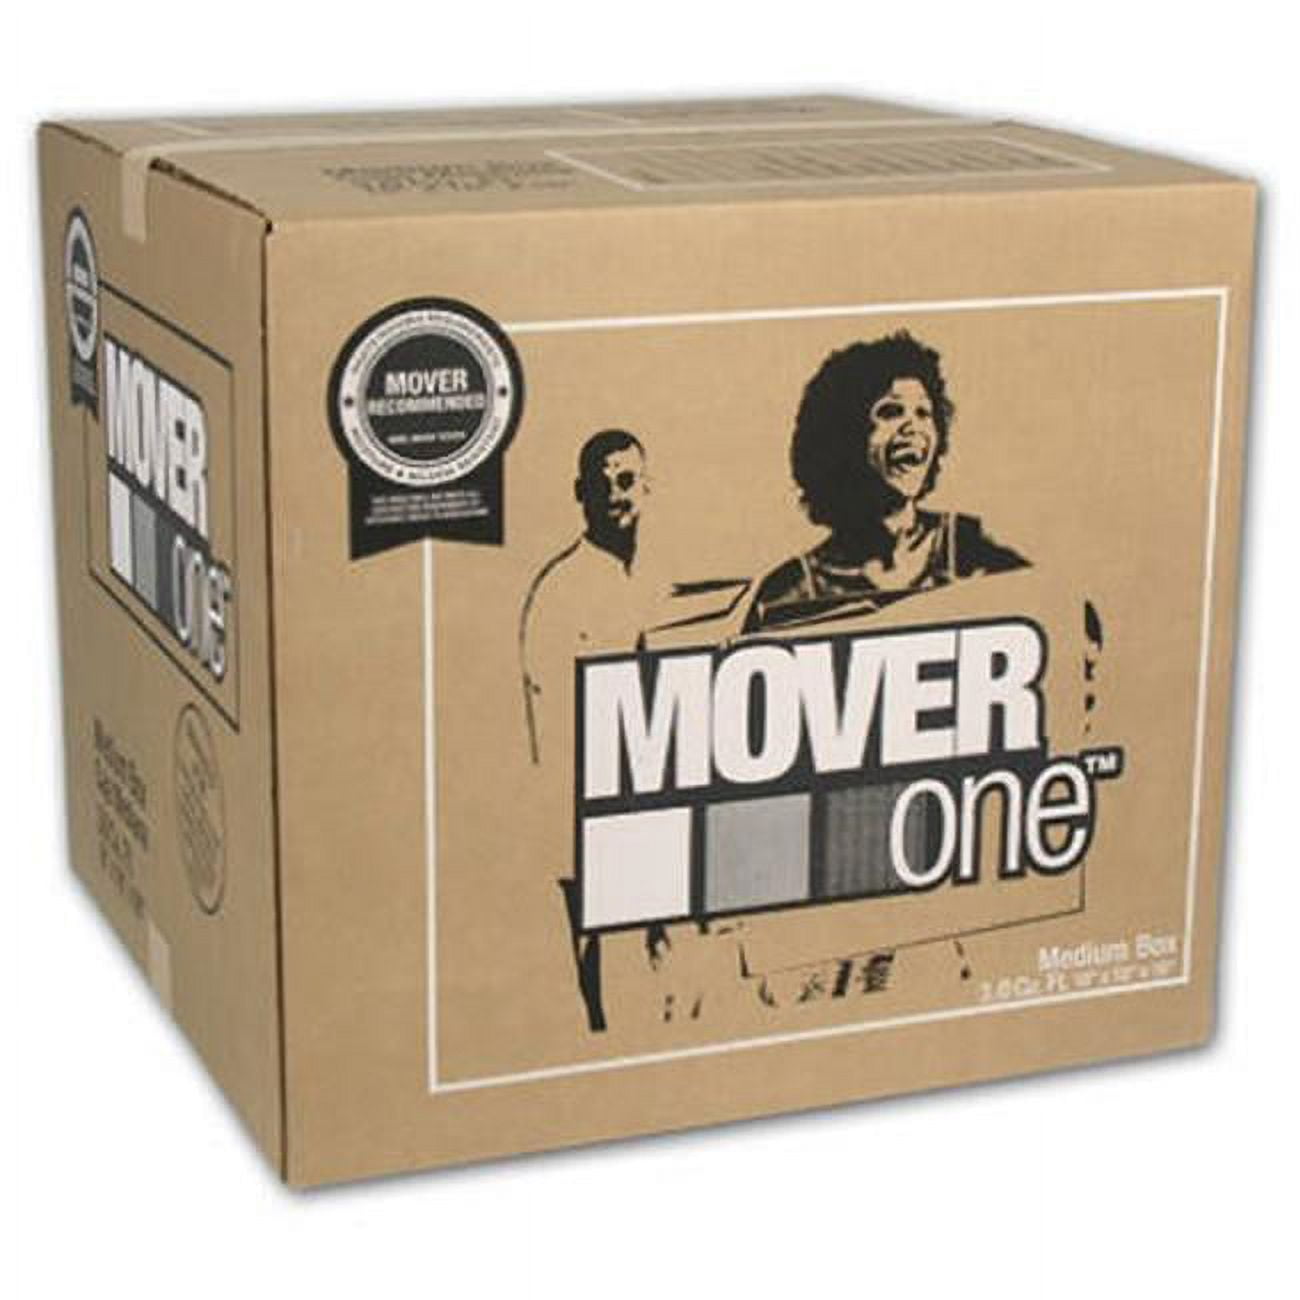 uBoxes 36 Moving Boxes, 2 Room Basic Moving Kit, Tape, Bubble